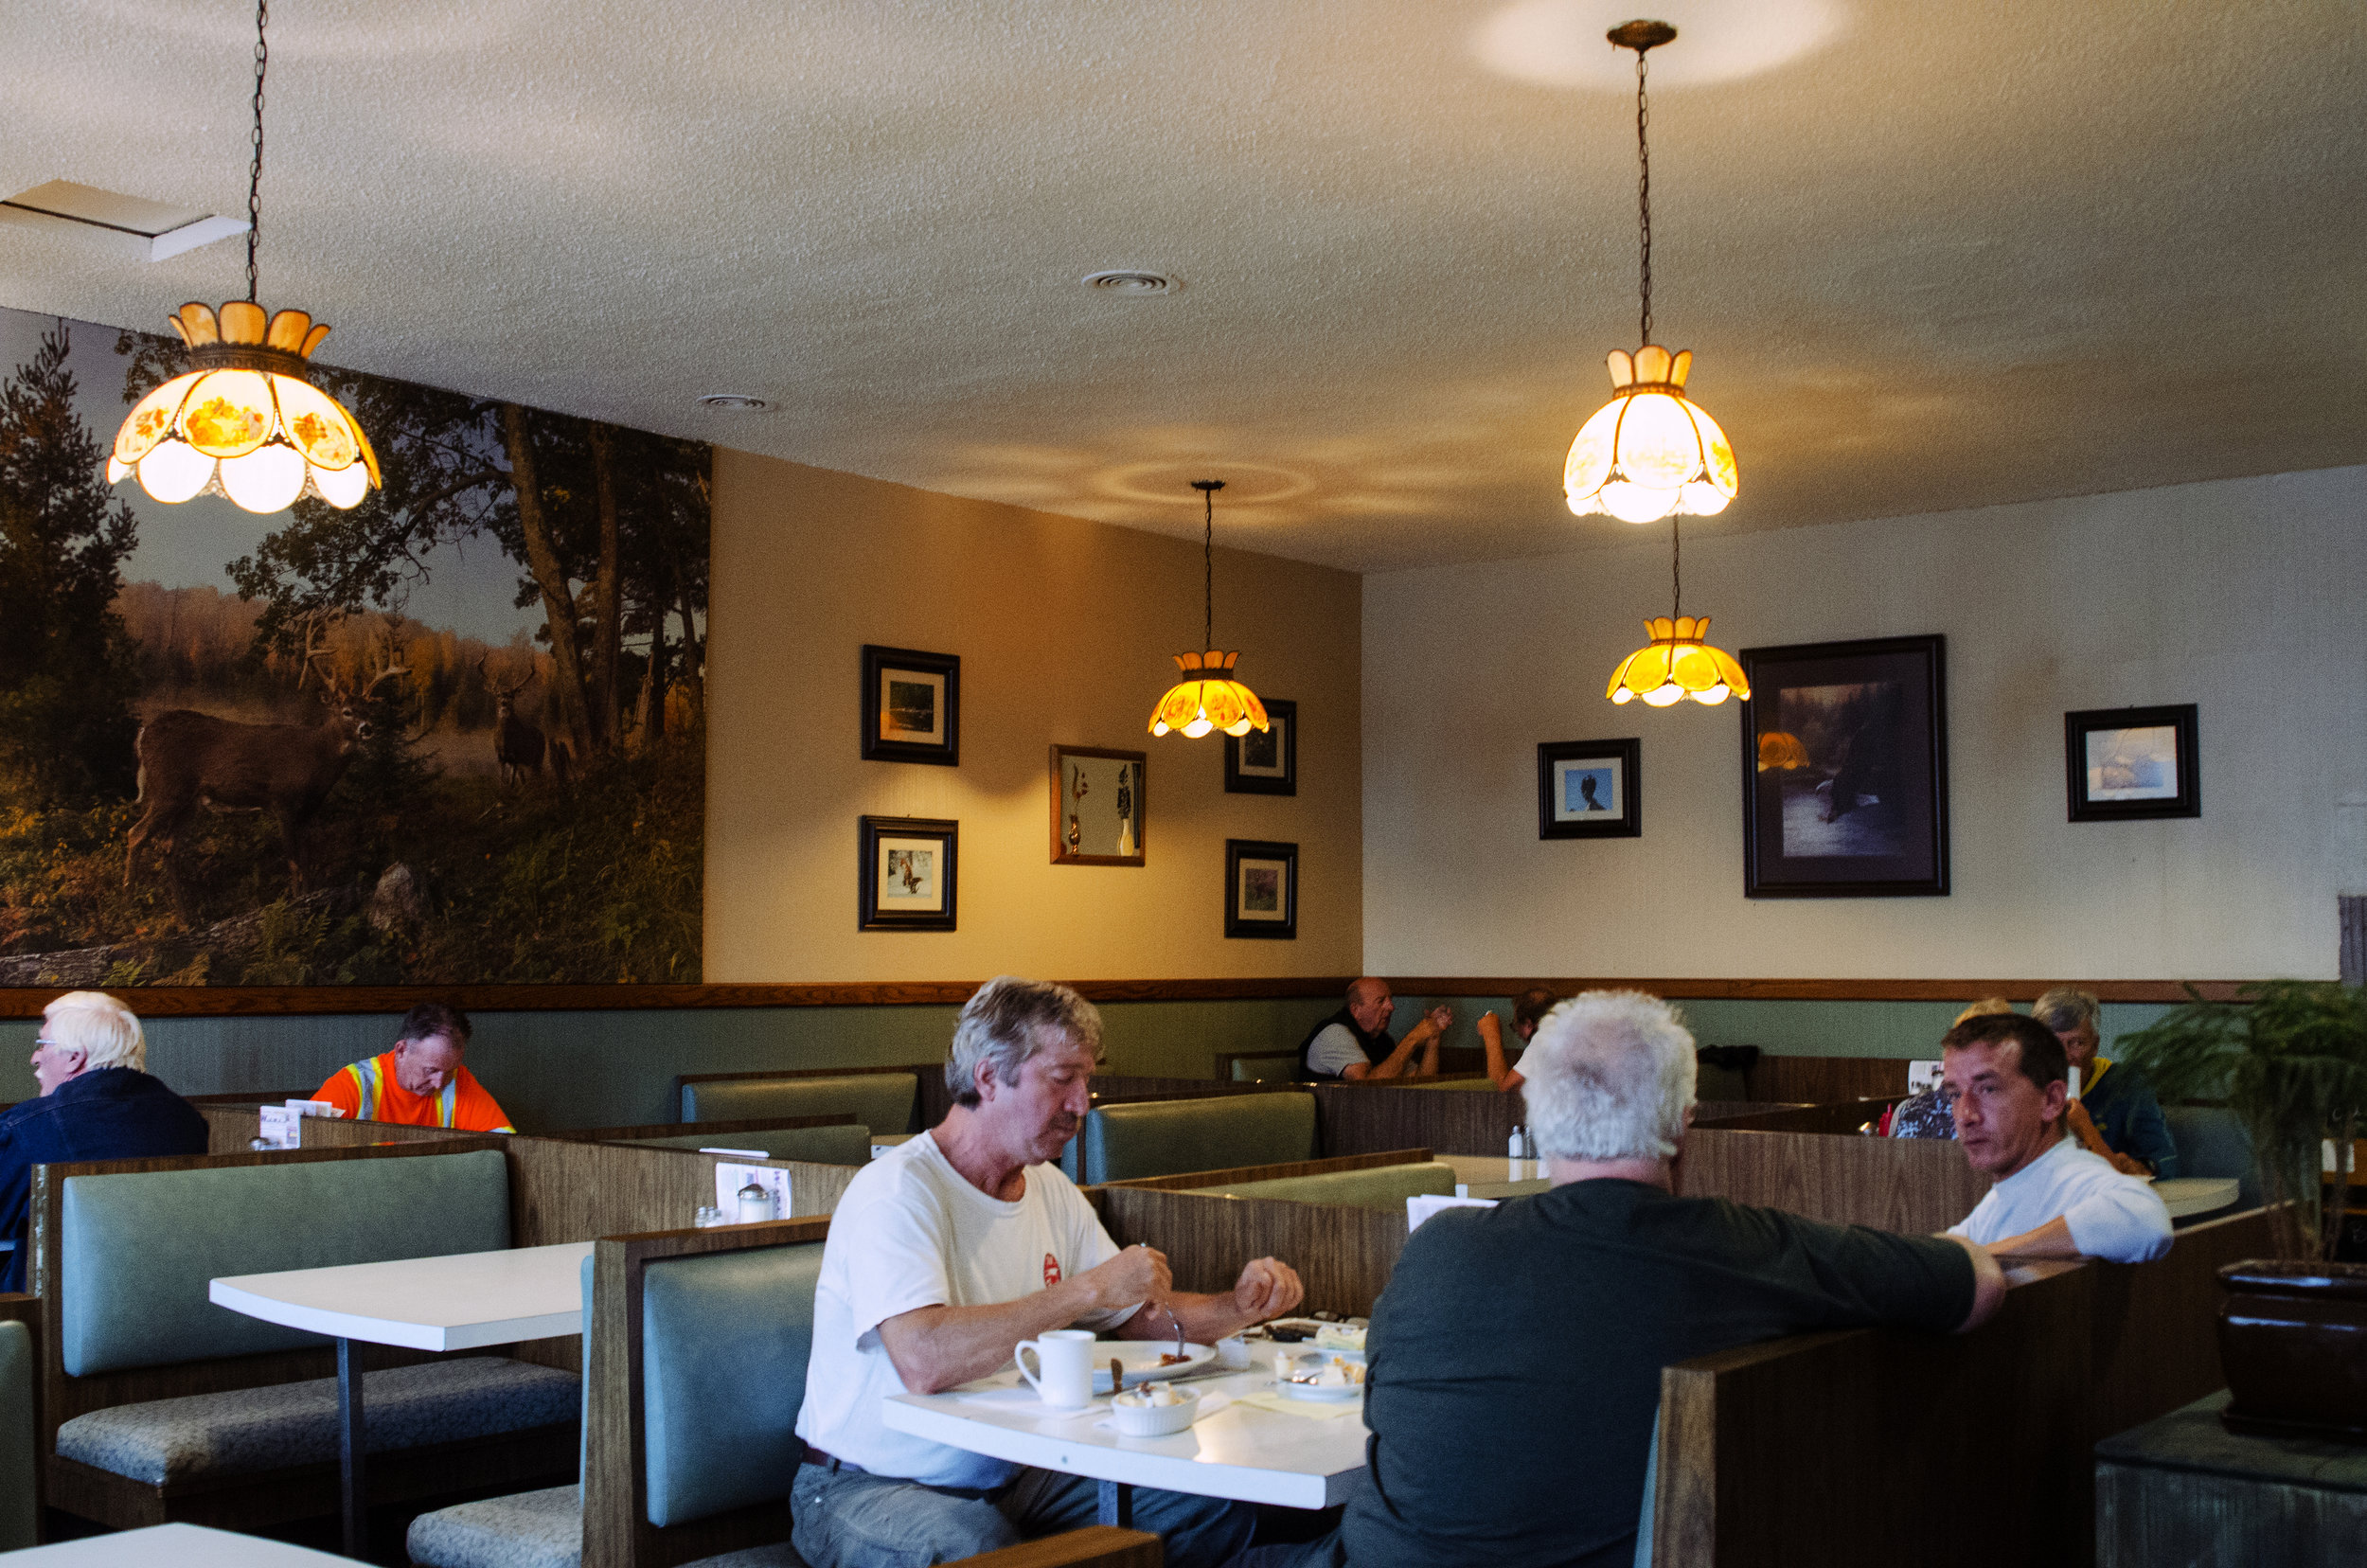   Jenkins, Cheyenne. Embassy Restaurant Breakfast. 2017. Digital Photography. Wawa, Ontario    